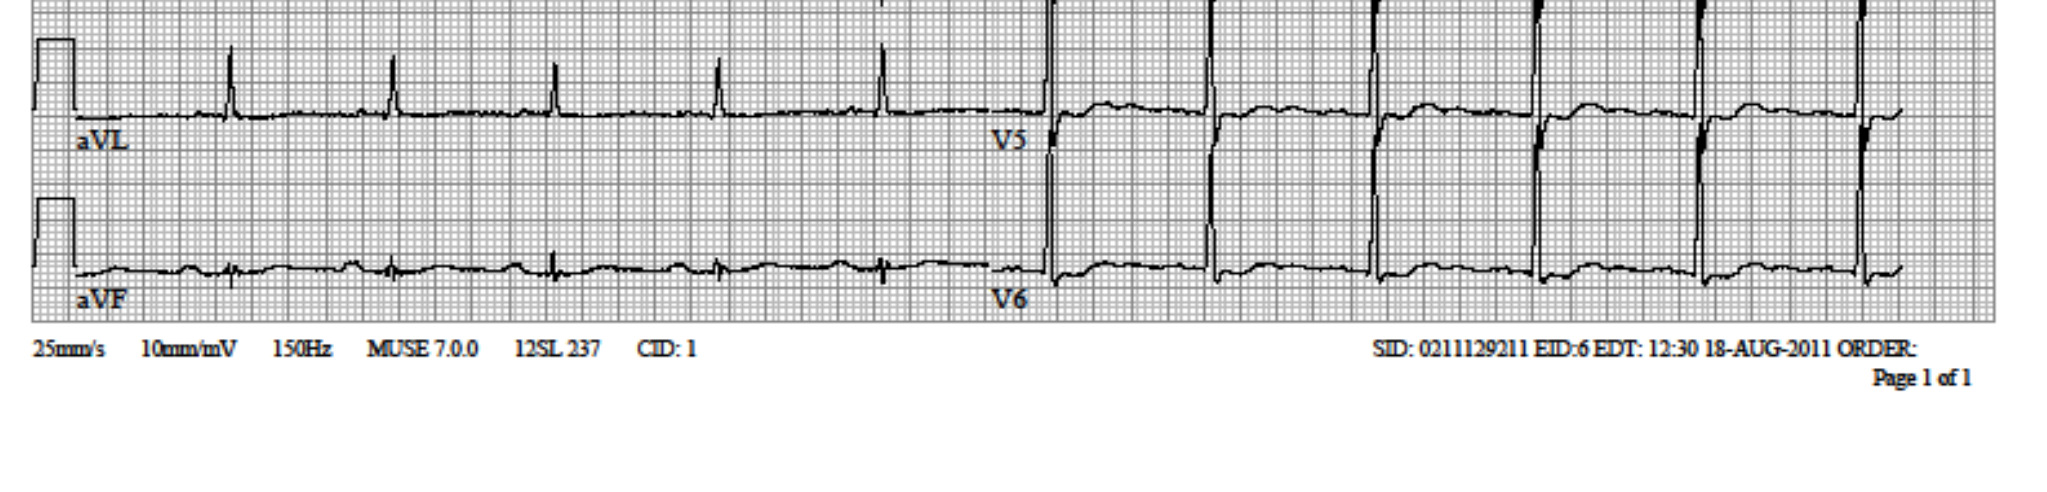 EKG 2 ICR höher!!! Verdacht auf Brugada- Syndrom!